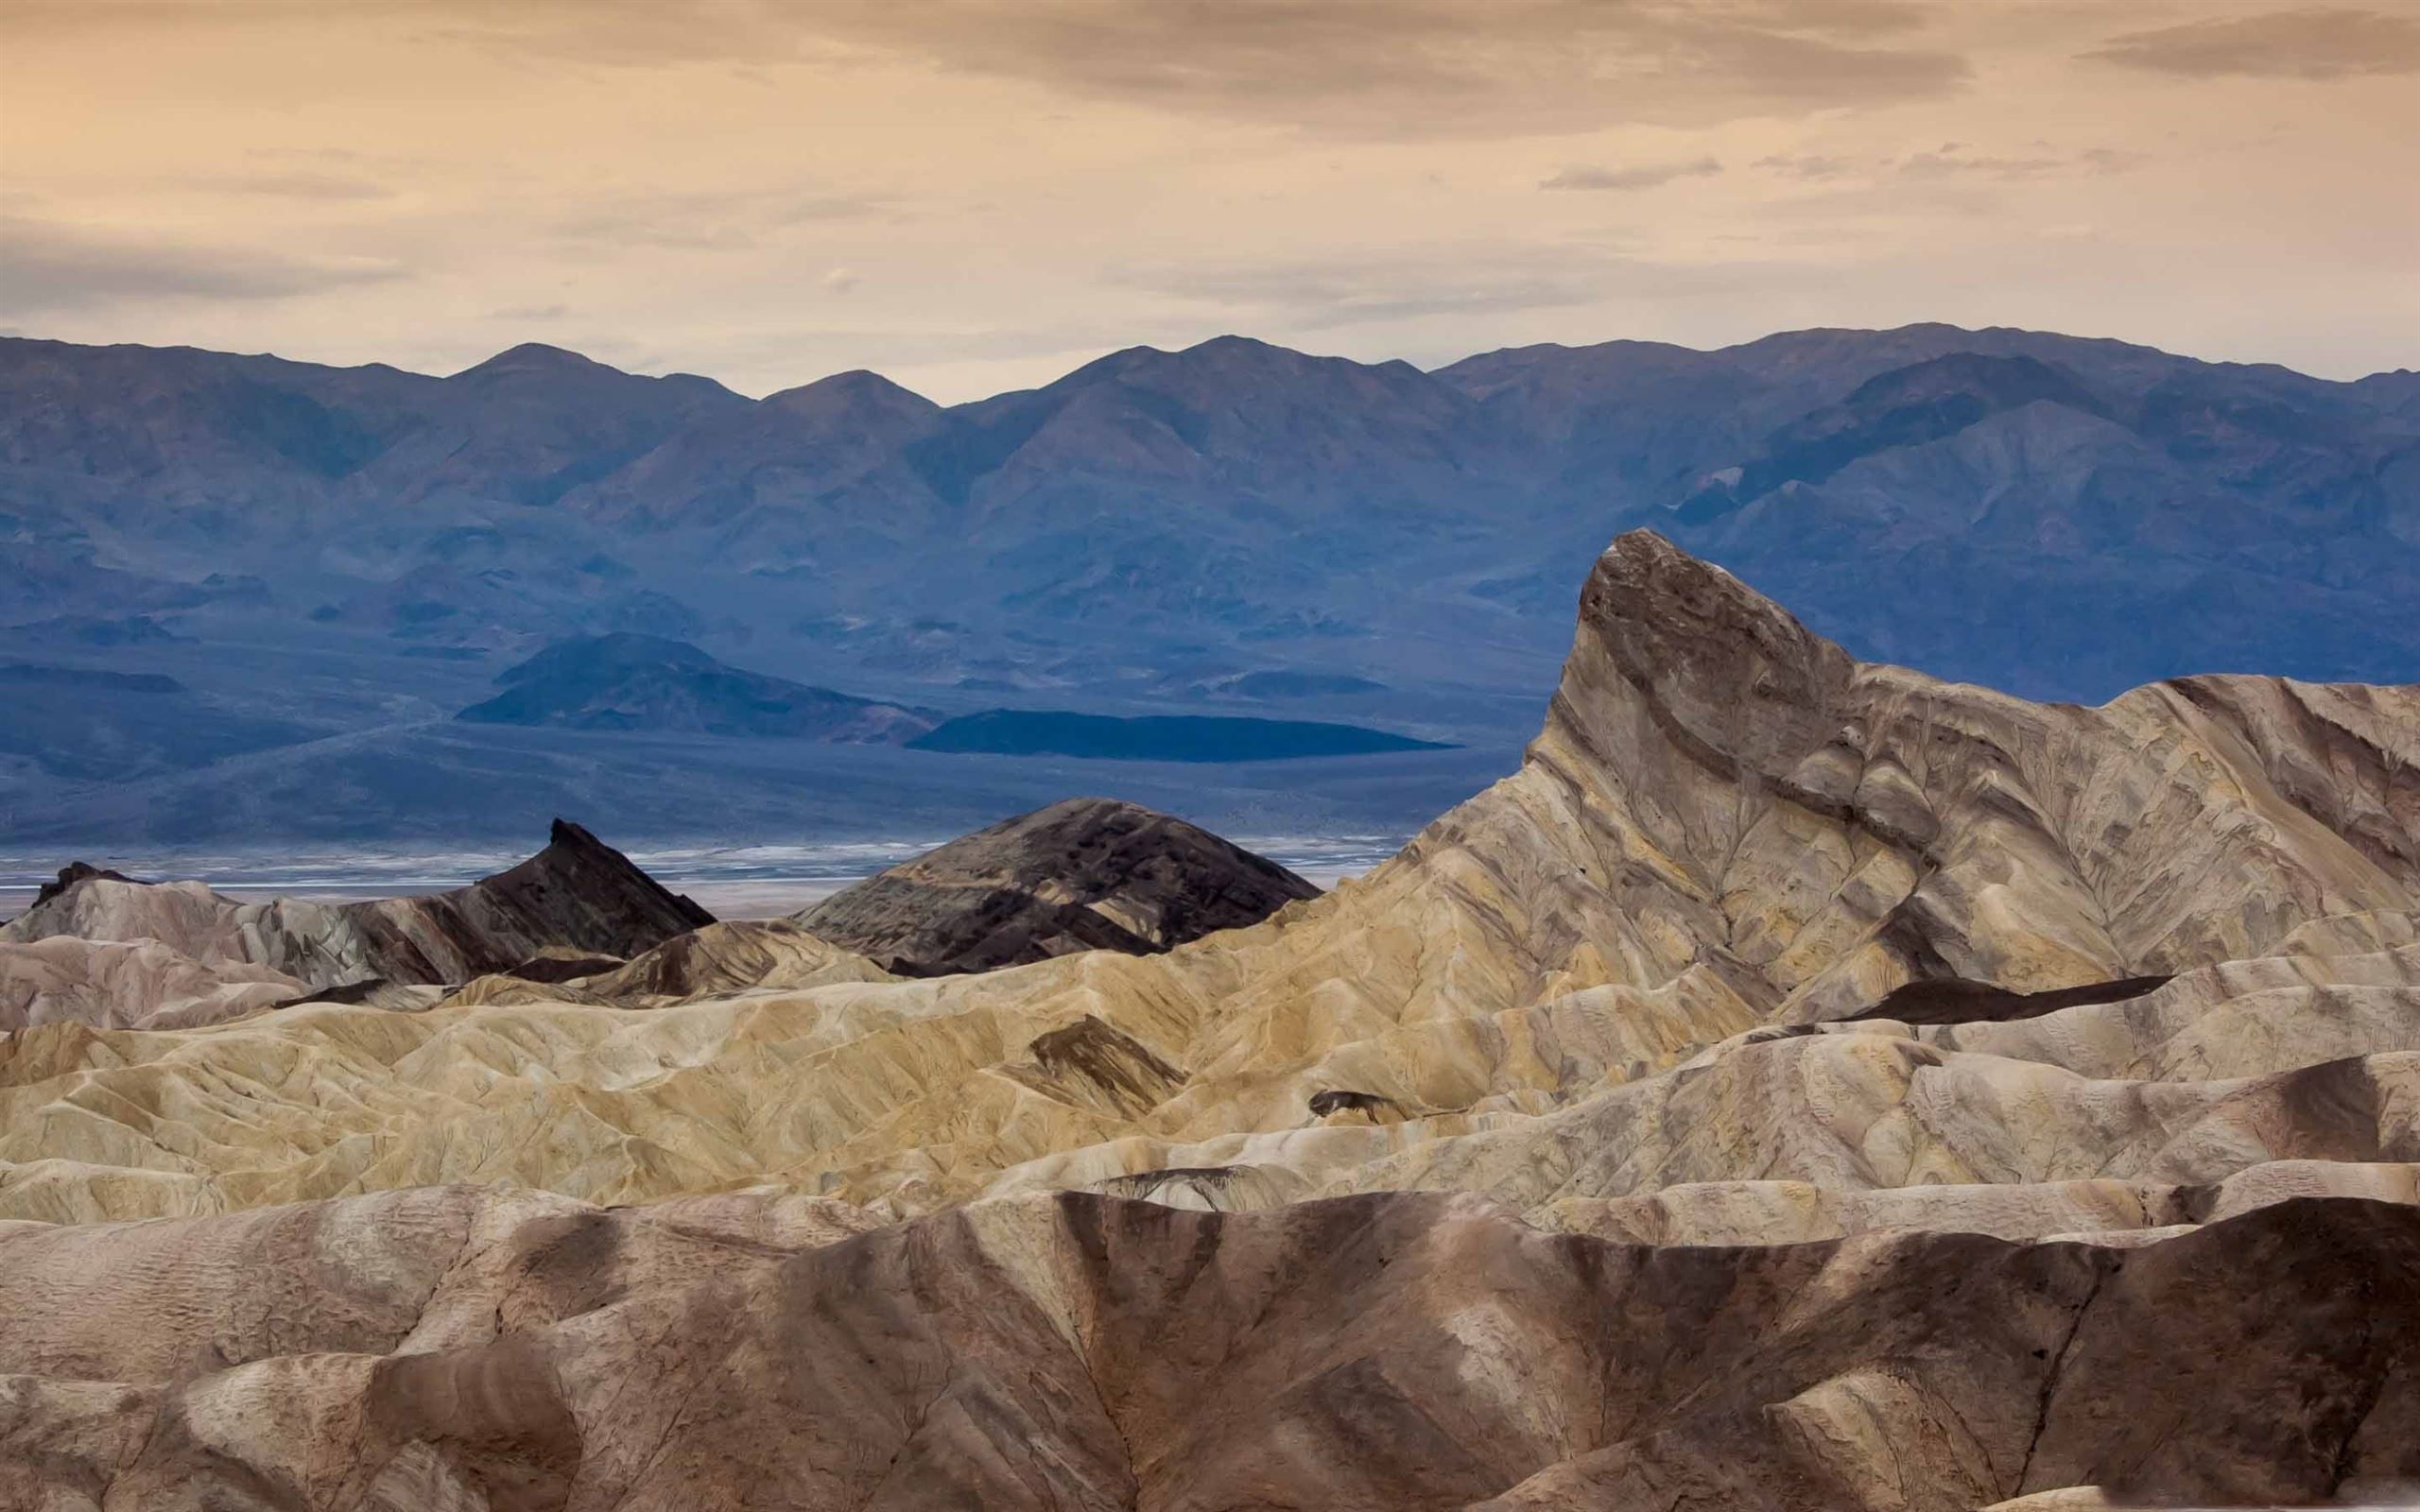 Death Valley National Park, Mac wallpapers, Stunning landscapes, Free download, 2560x1600 HD Desktop